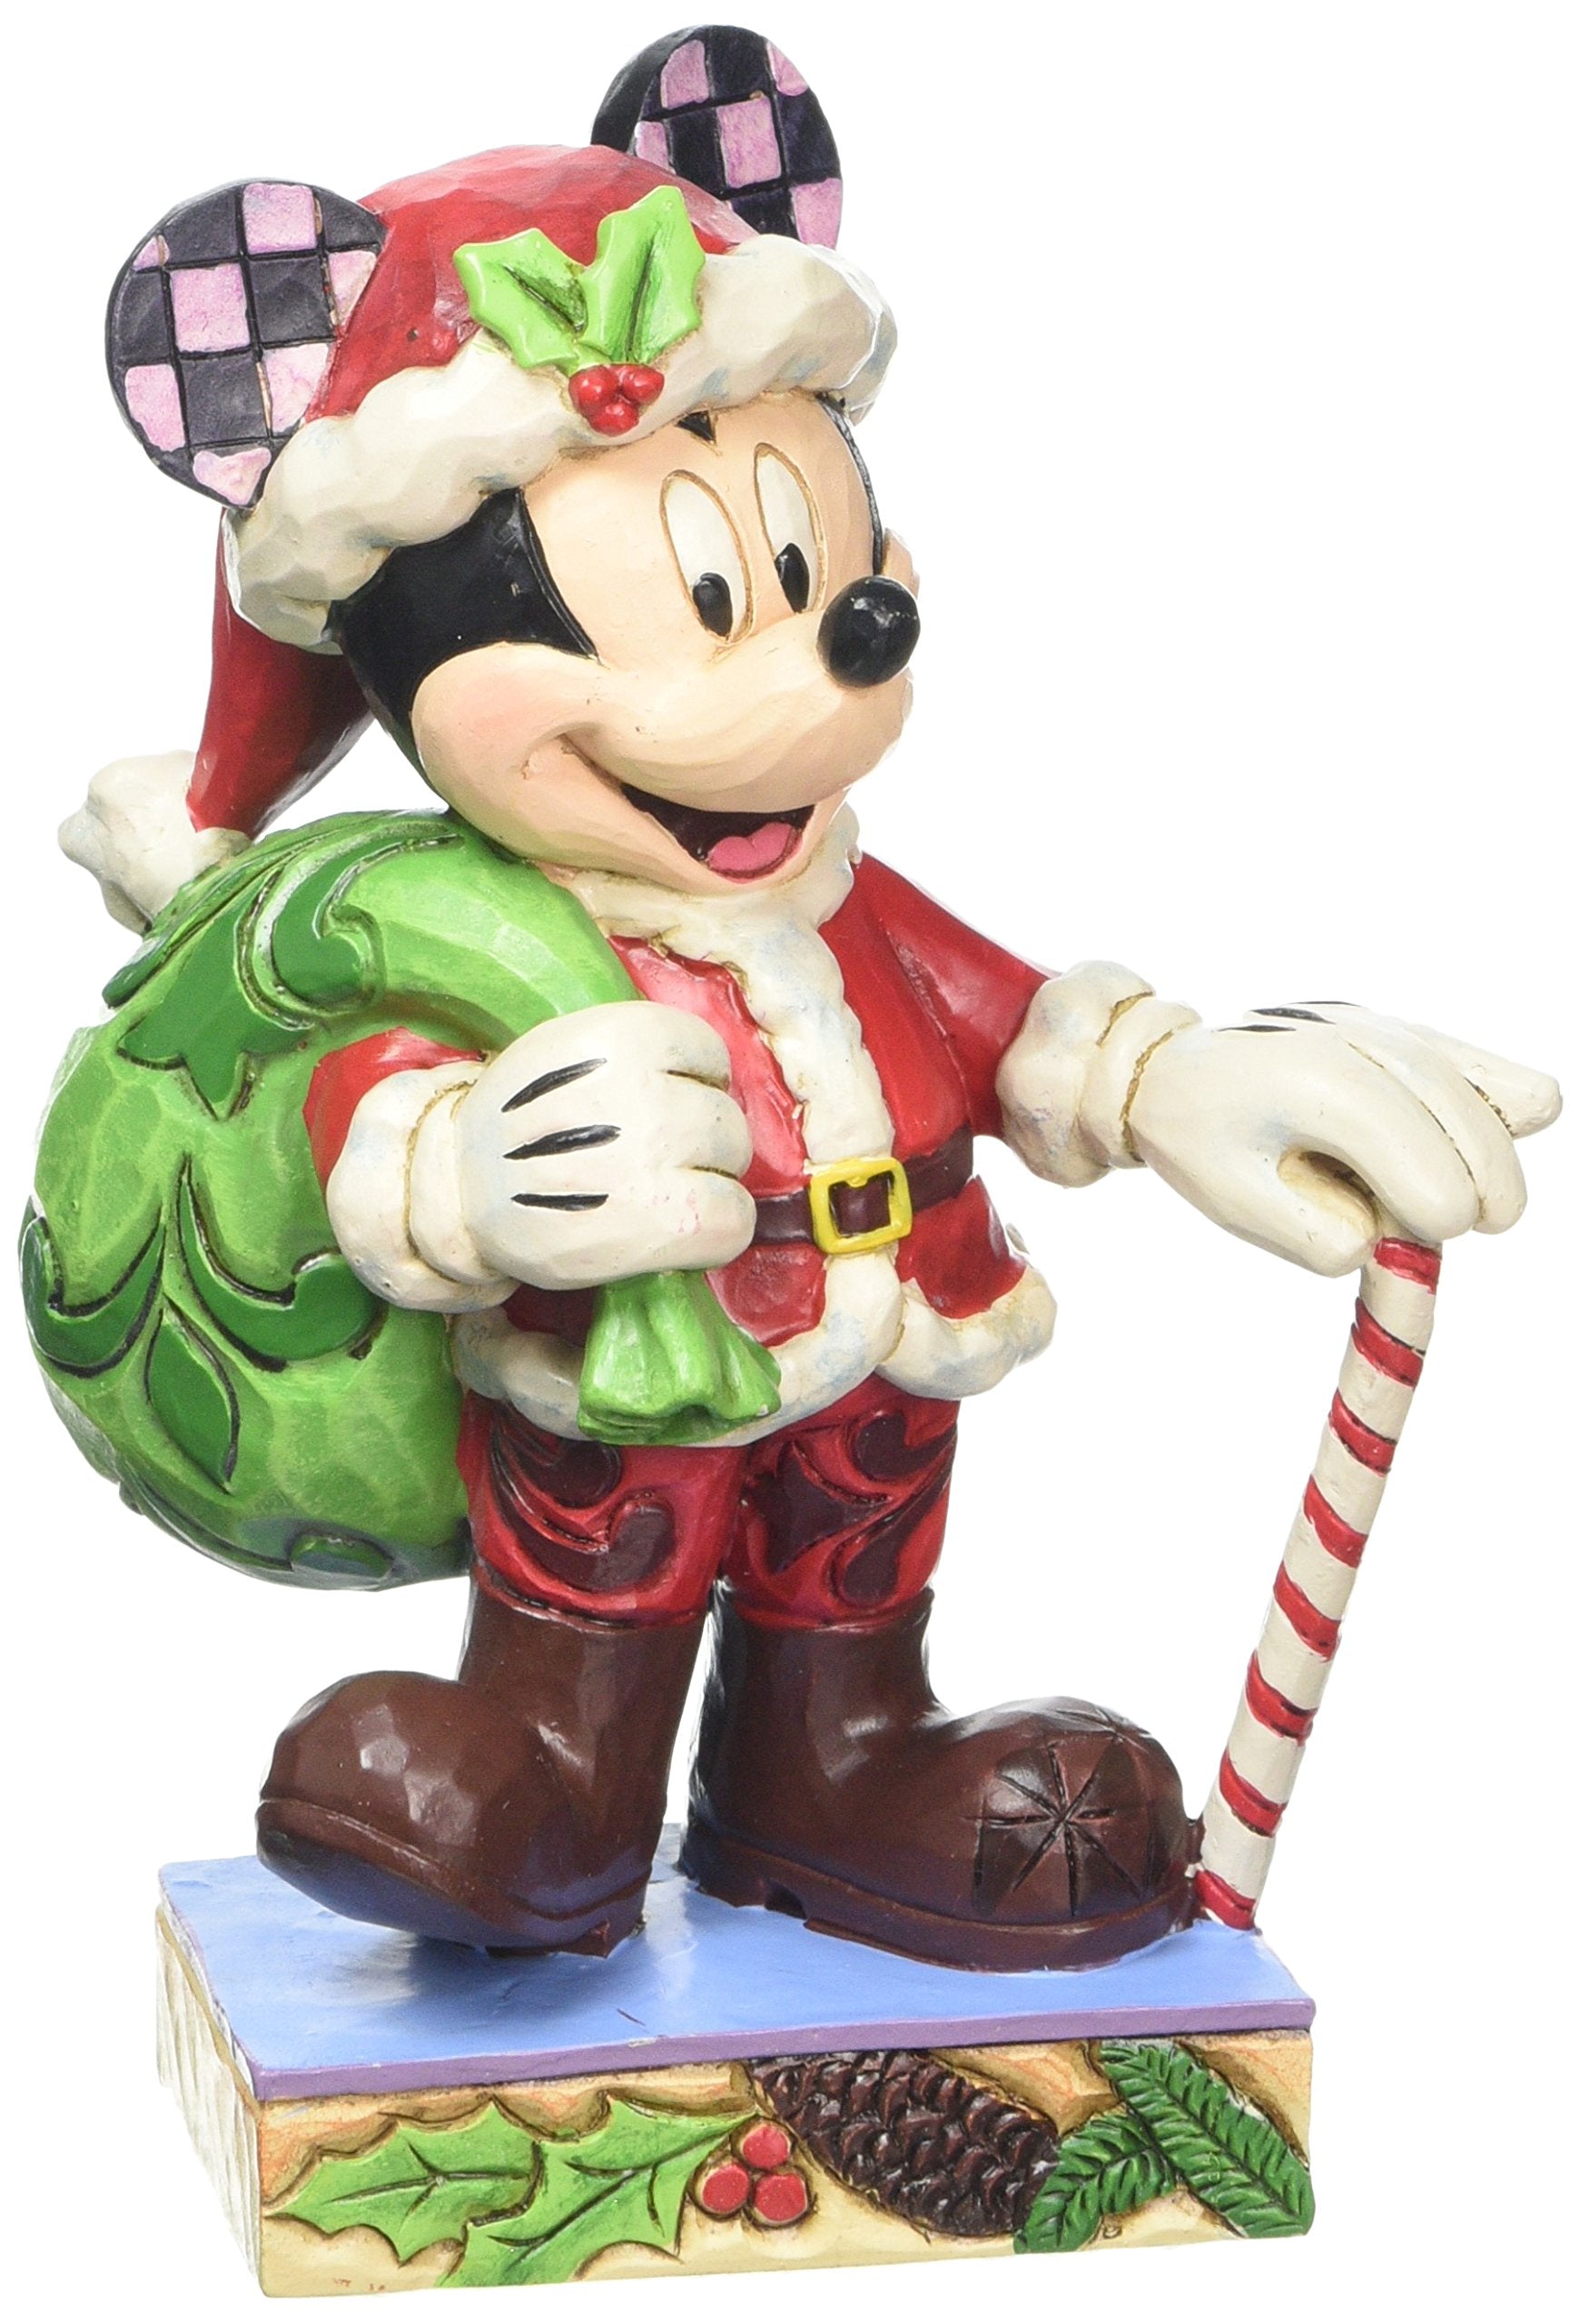 Jim Shore for Enesco Disney Traditions by Christmas Mickey Figurine, 4.5"